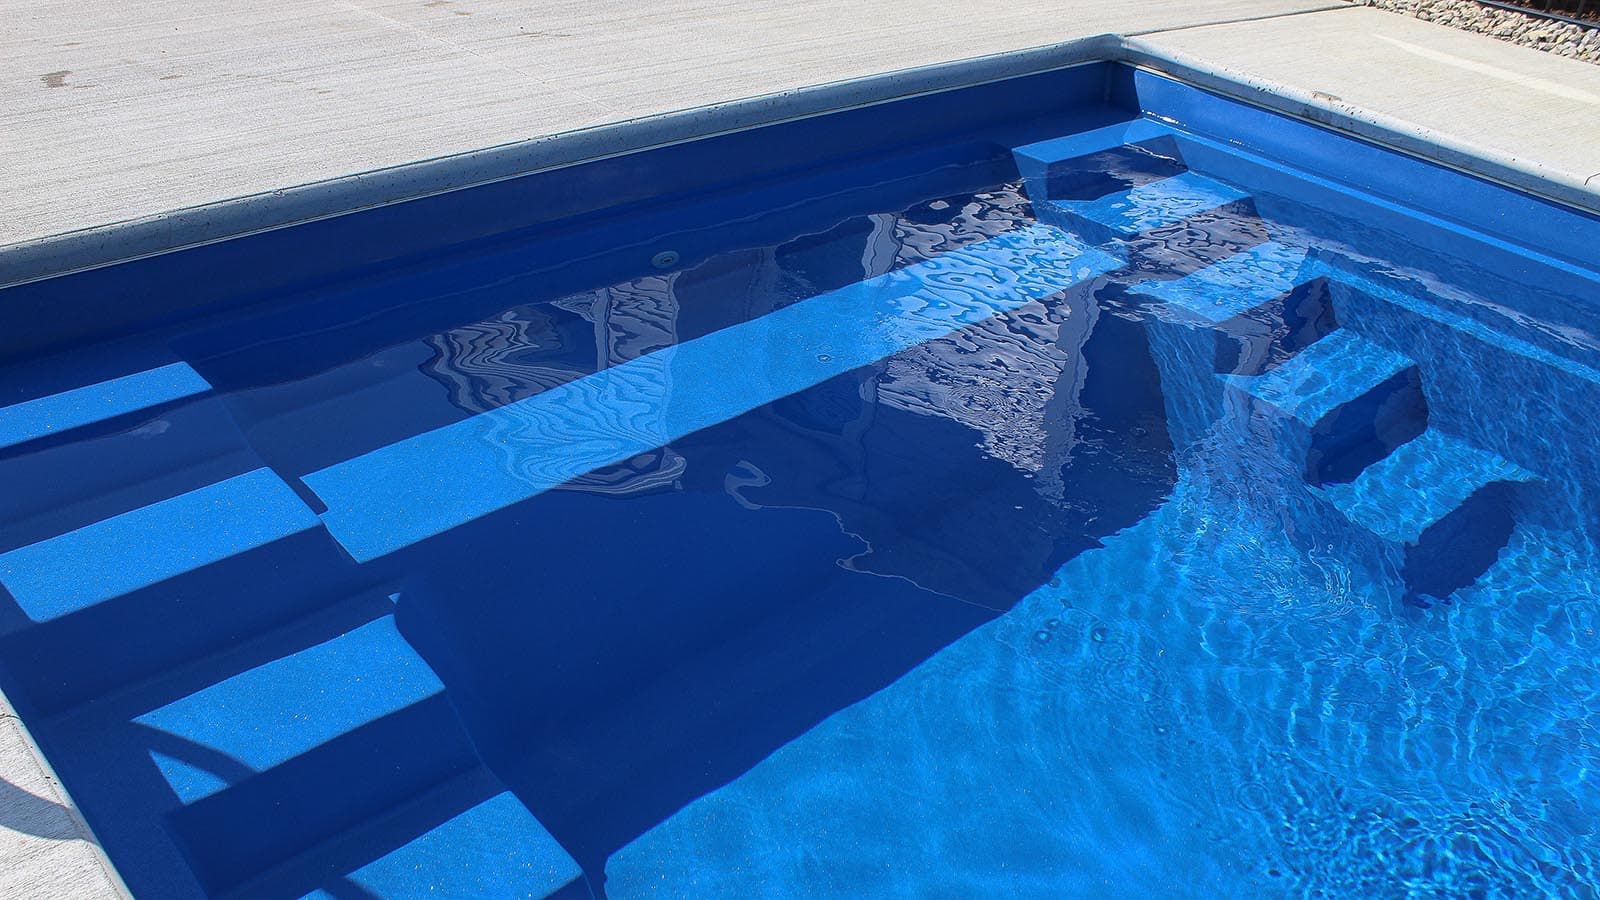 The Imagine Pools Freedom fibreglass swimming pool